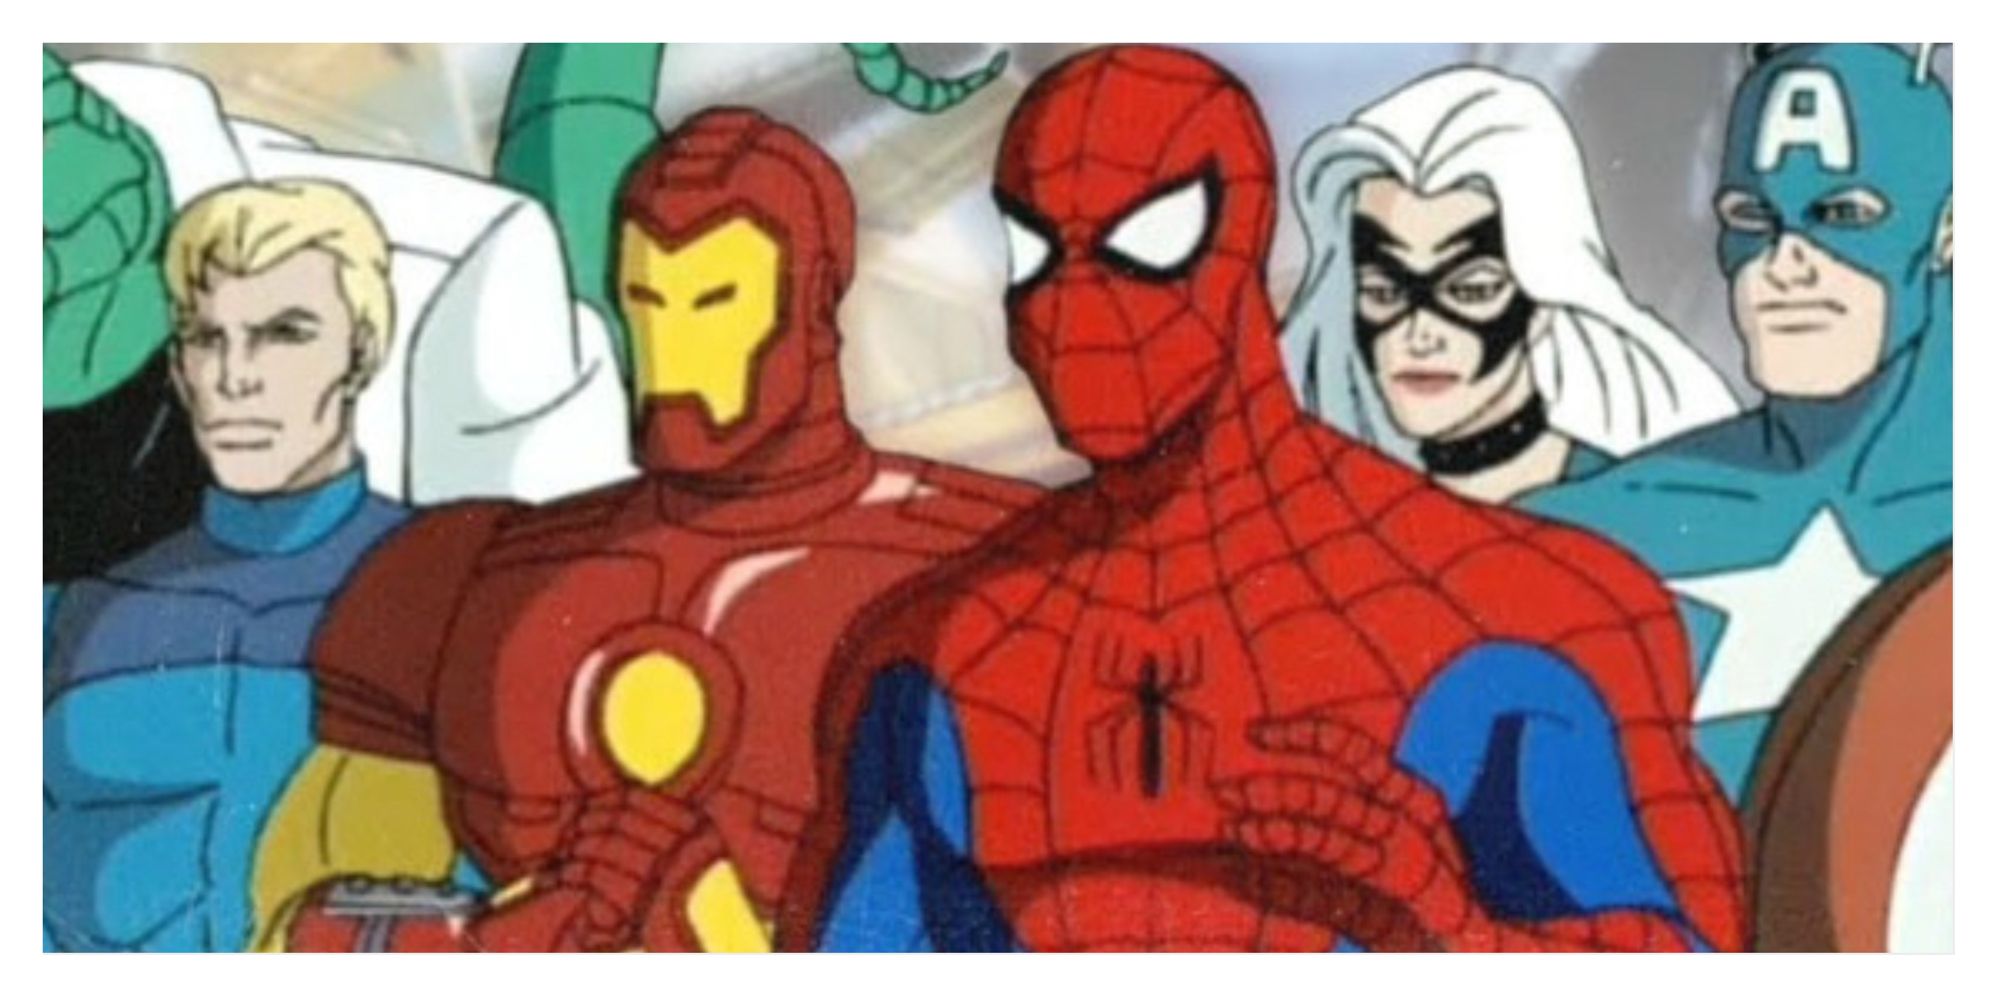 Lizard, Johnny Storm, Iron Man, Spider-Man, Black Cat, Captain America (left to right)